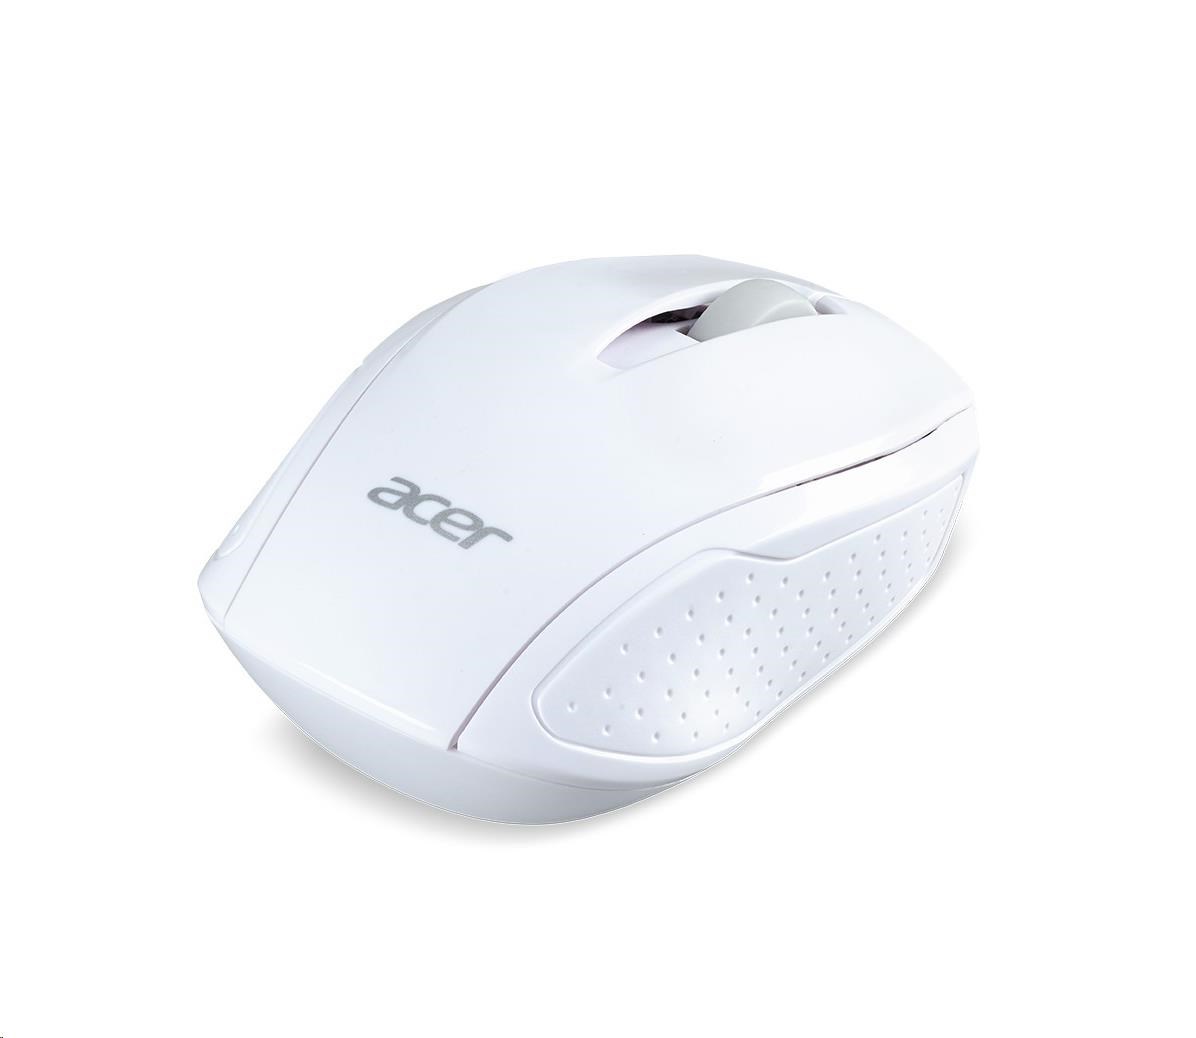 Bezdrôtová myš ACER G69 White - RF2.4G,  1600 dpi,  95x58x35 mm,  dosah 10 m,  2x AAA,  Win/ Chrome/ Mac,  maloobchodné balenie1 